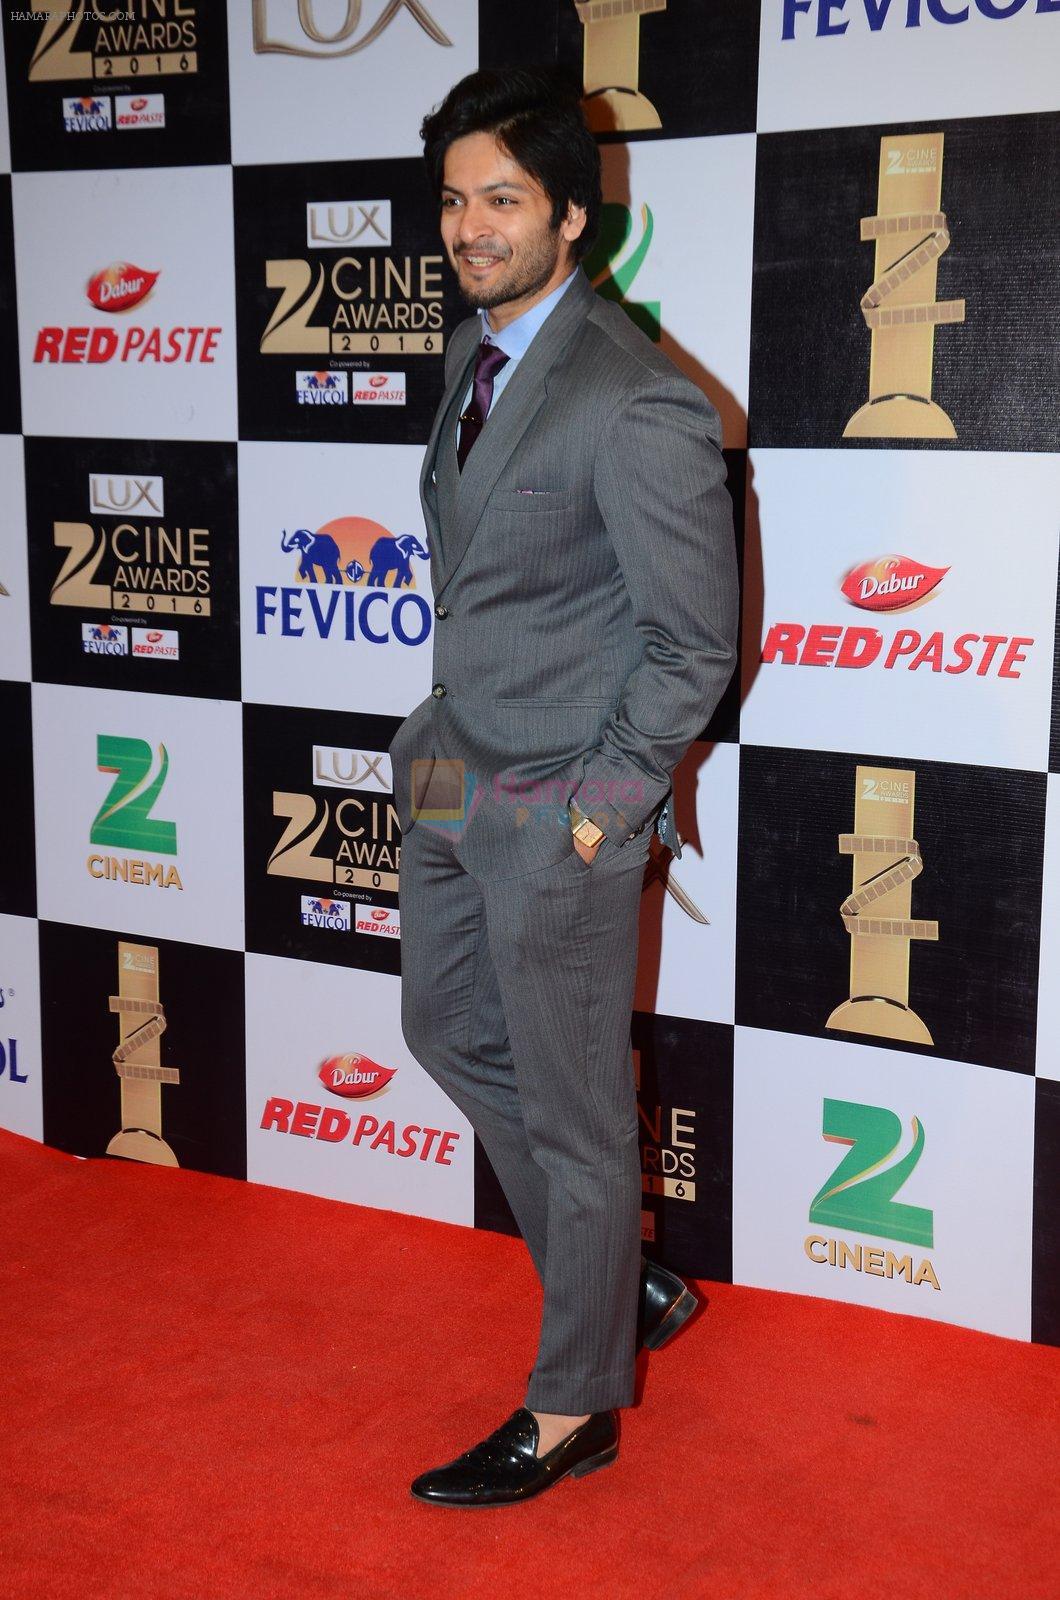 Ali Fazal at zee cine awards 2016 on 20th Feb 2016